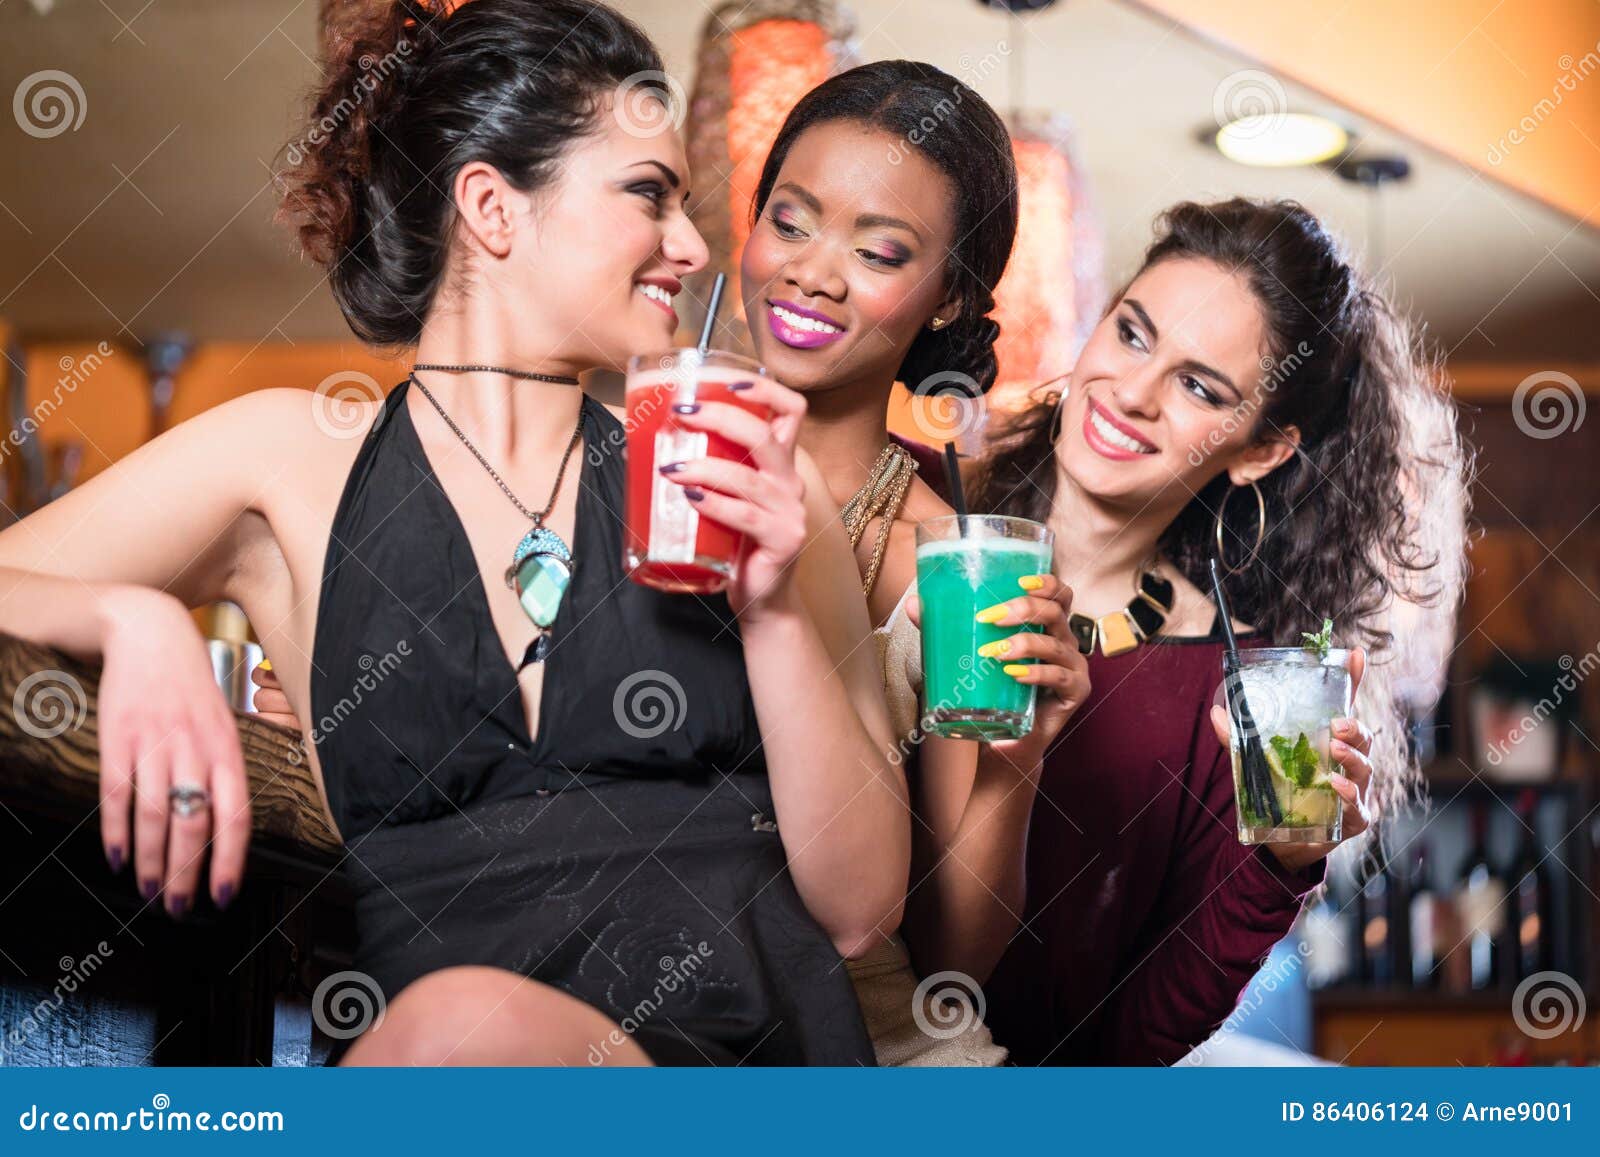 Girls Enjoying Nightlife in a Club, Drinking Cocktails Stock Photo ...